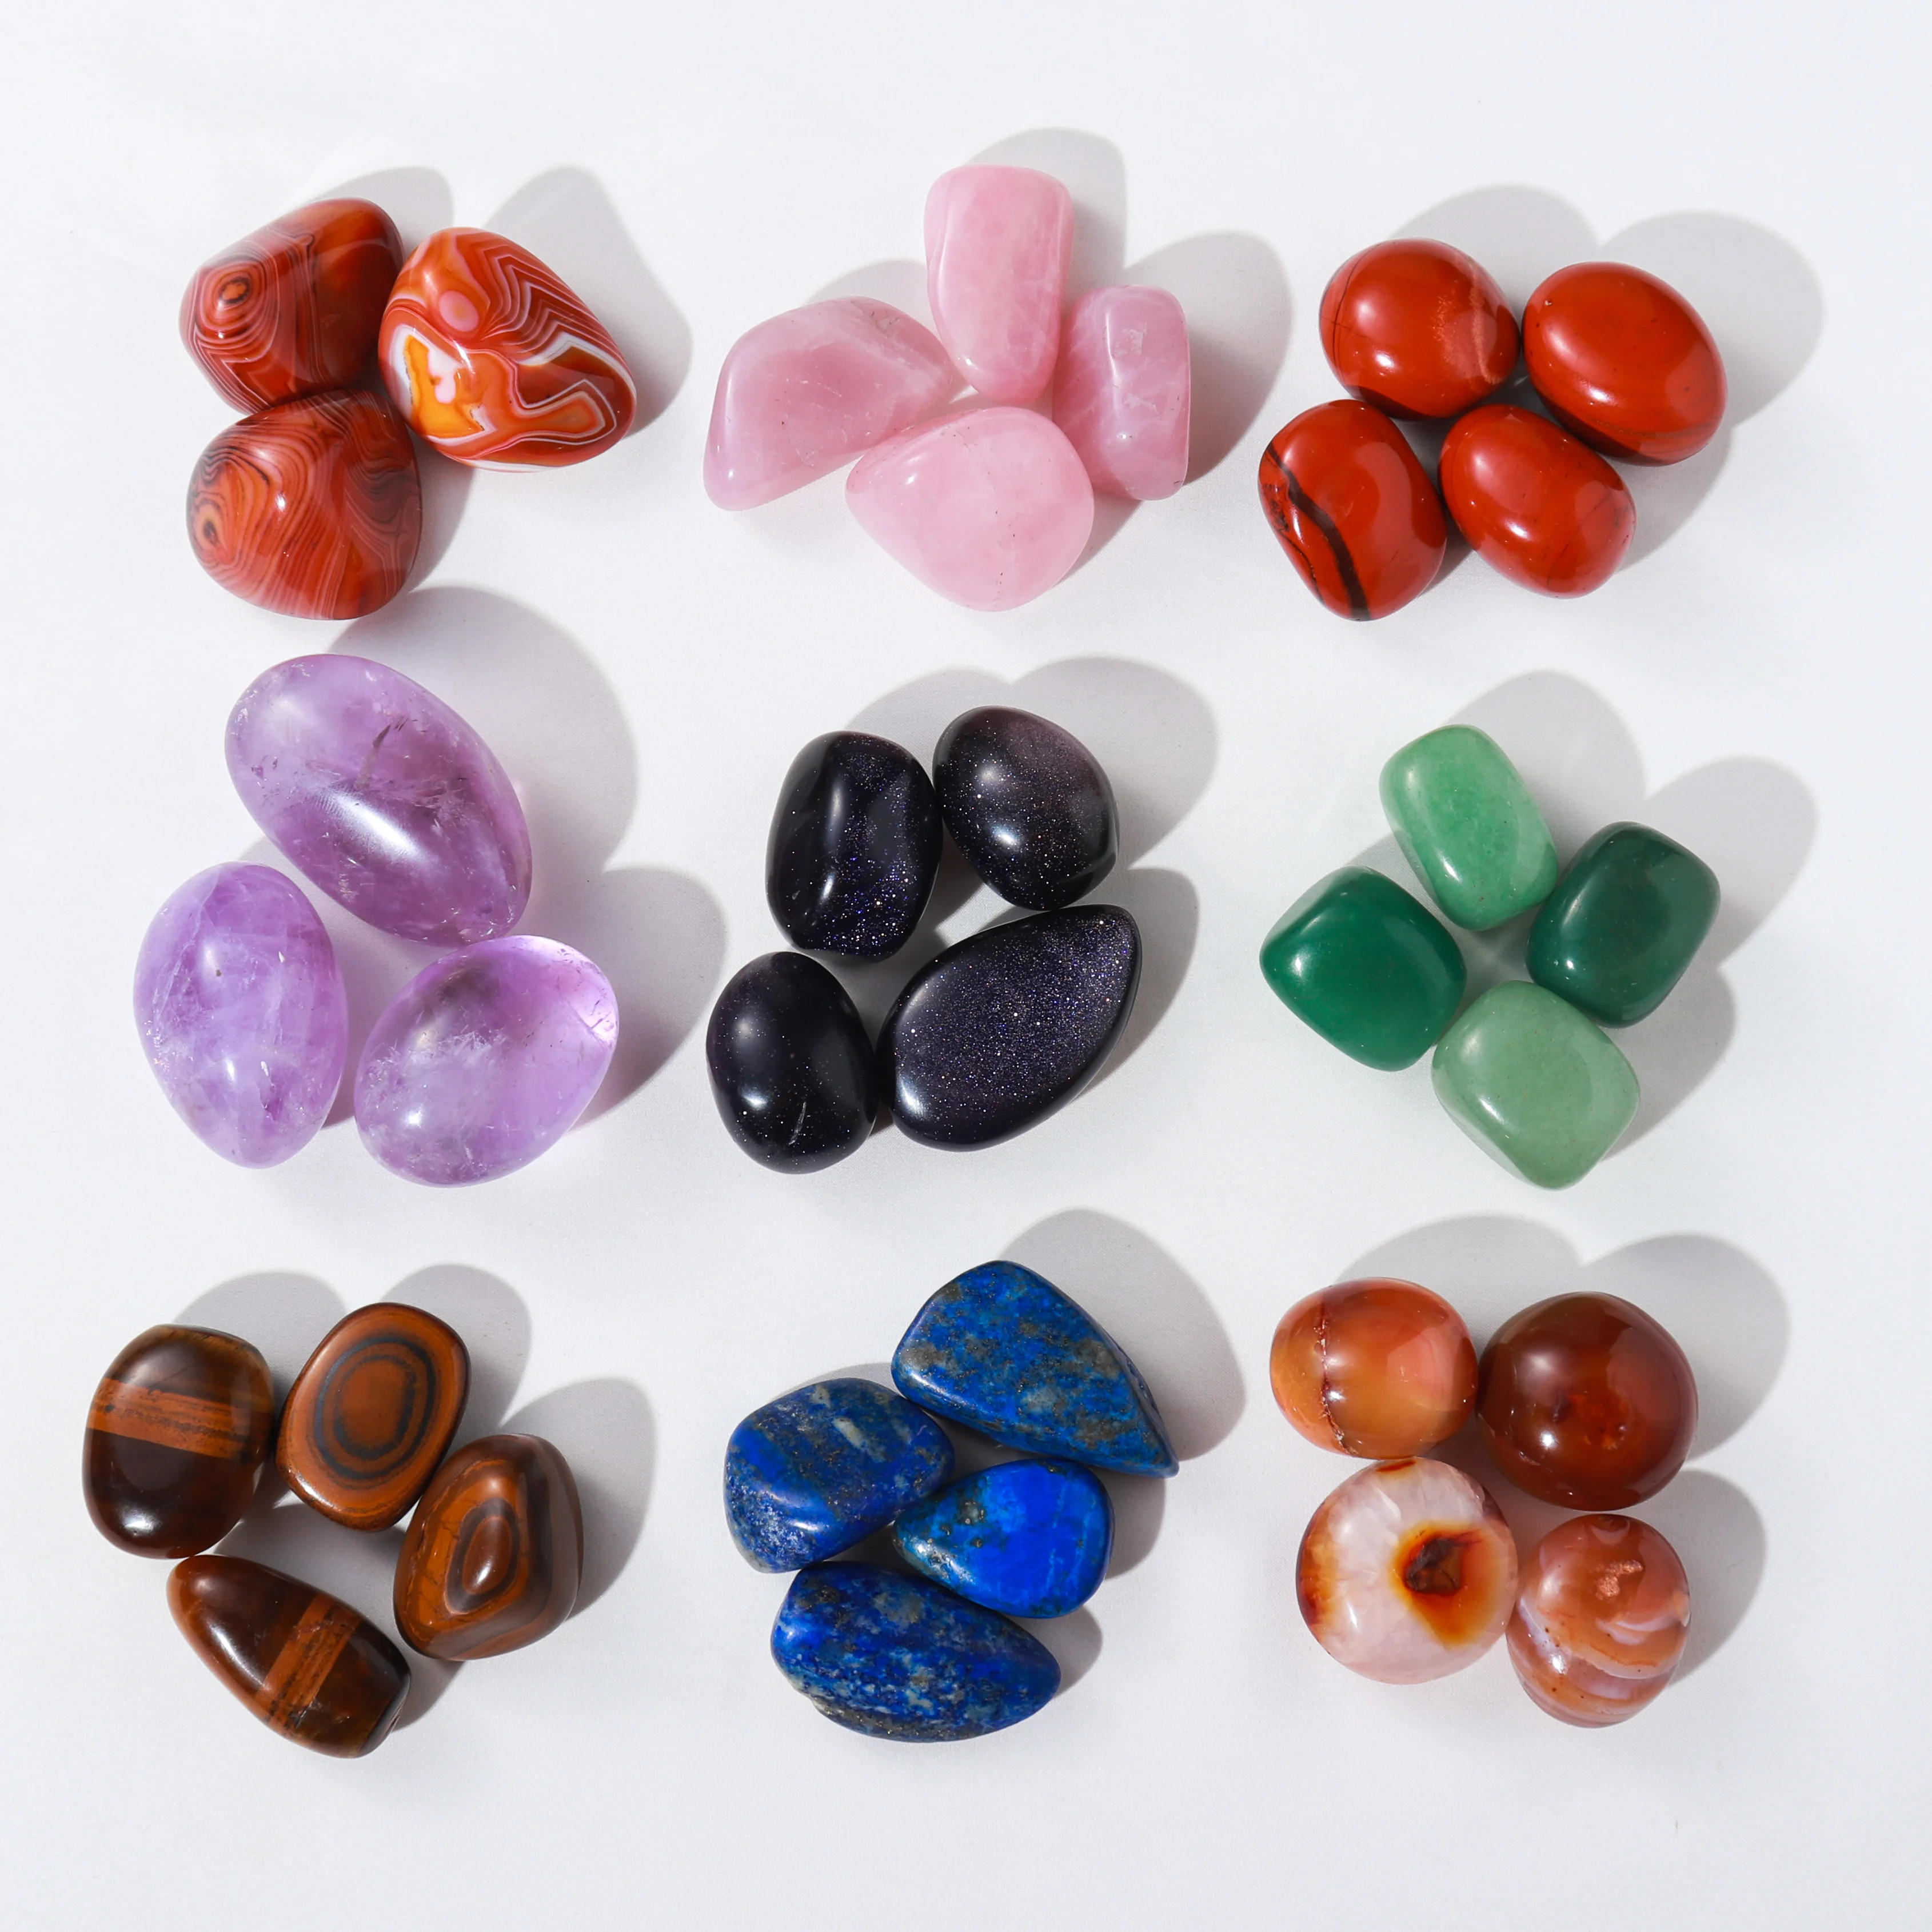 

natural stone amethyst tumbled crystals healing stones wholesale bulk rose quartz crystal tumble stones